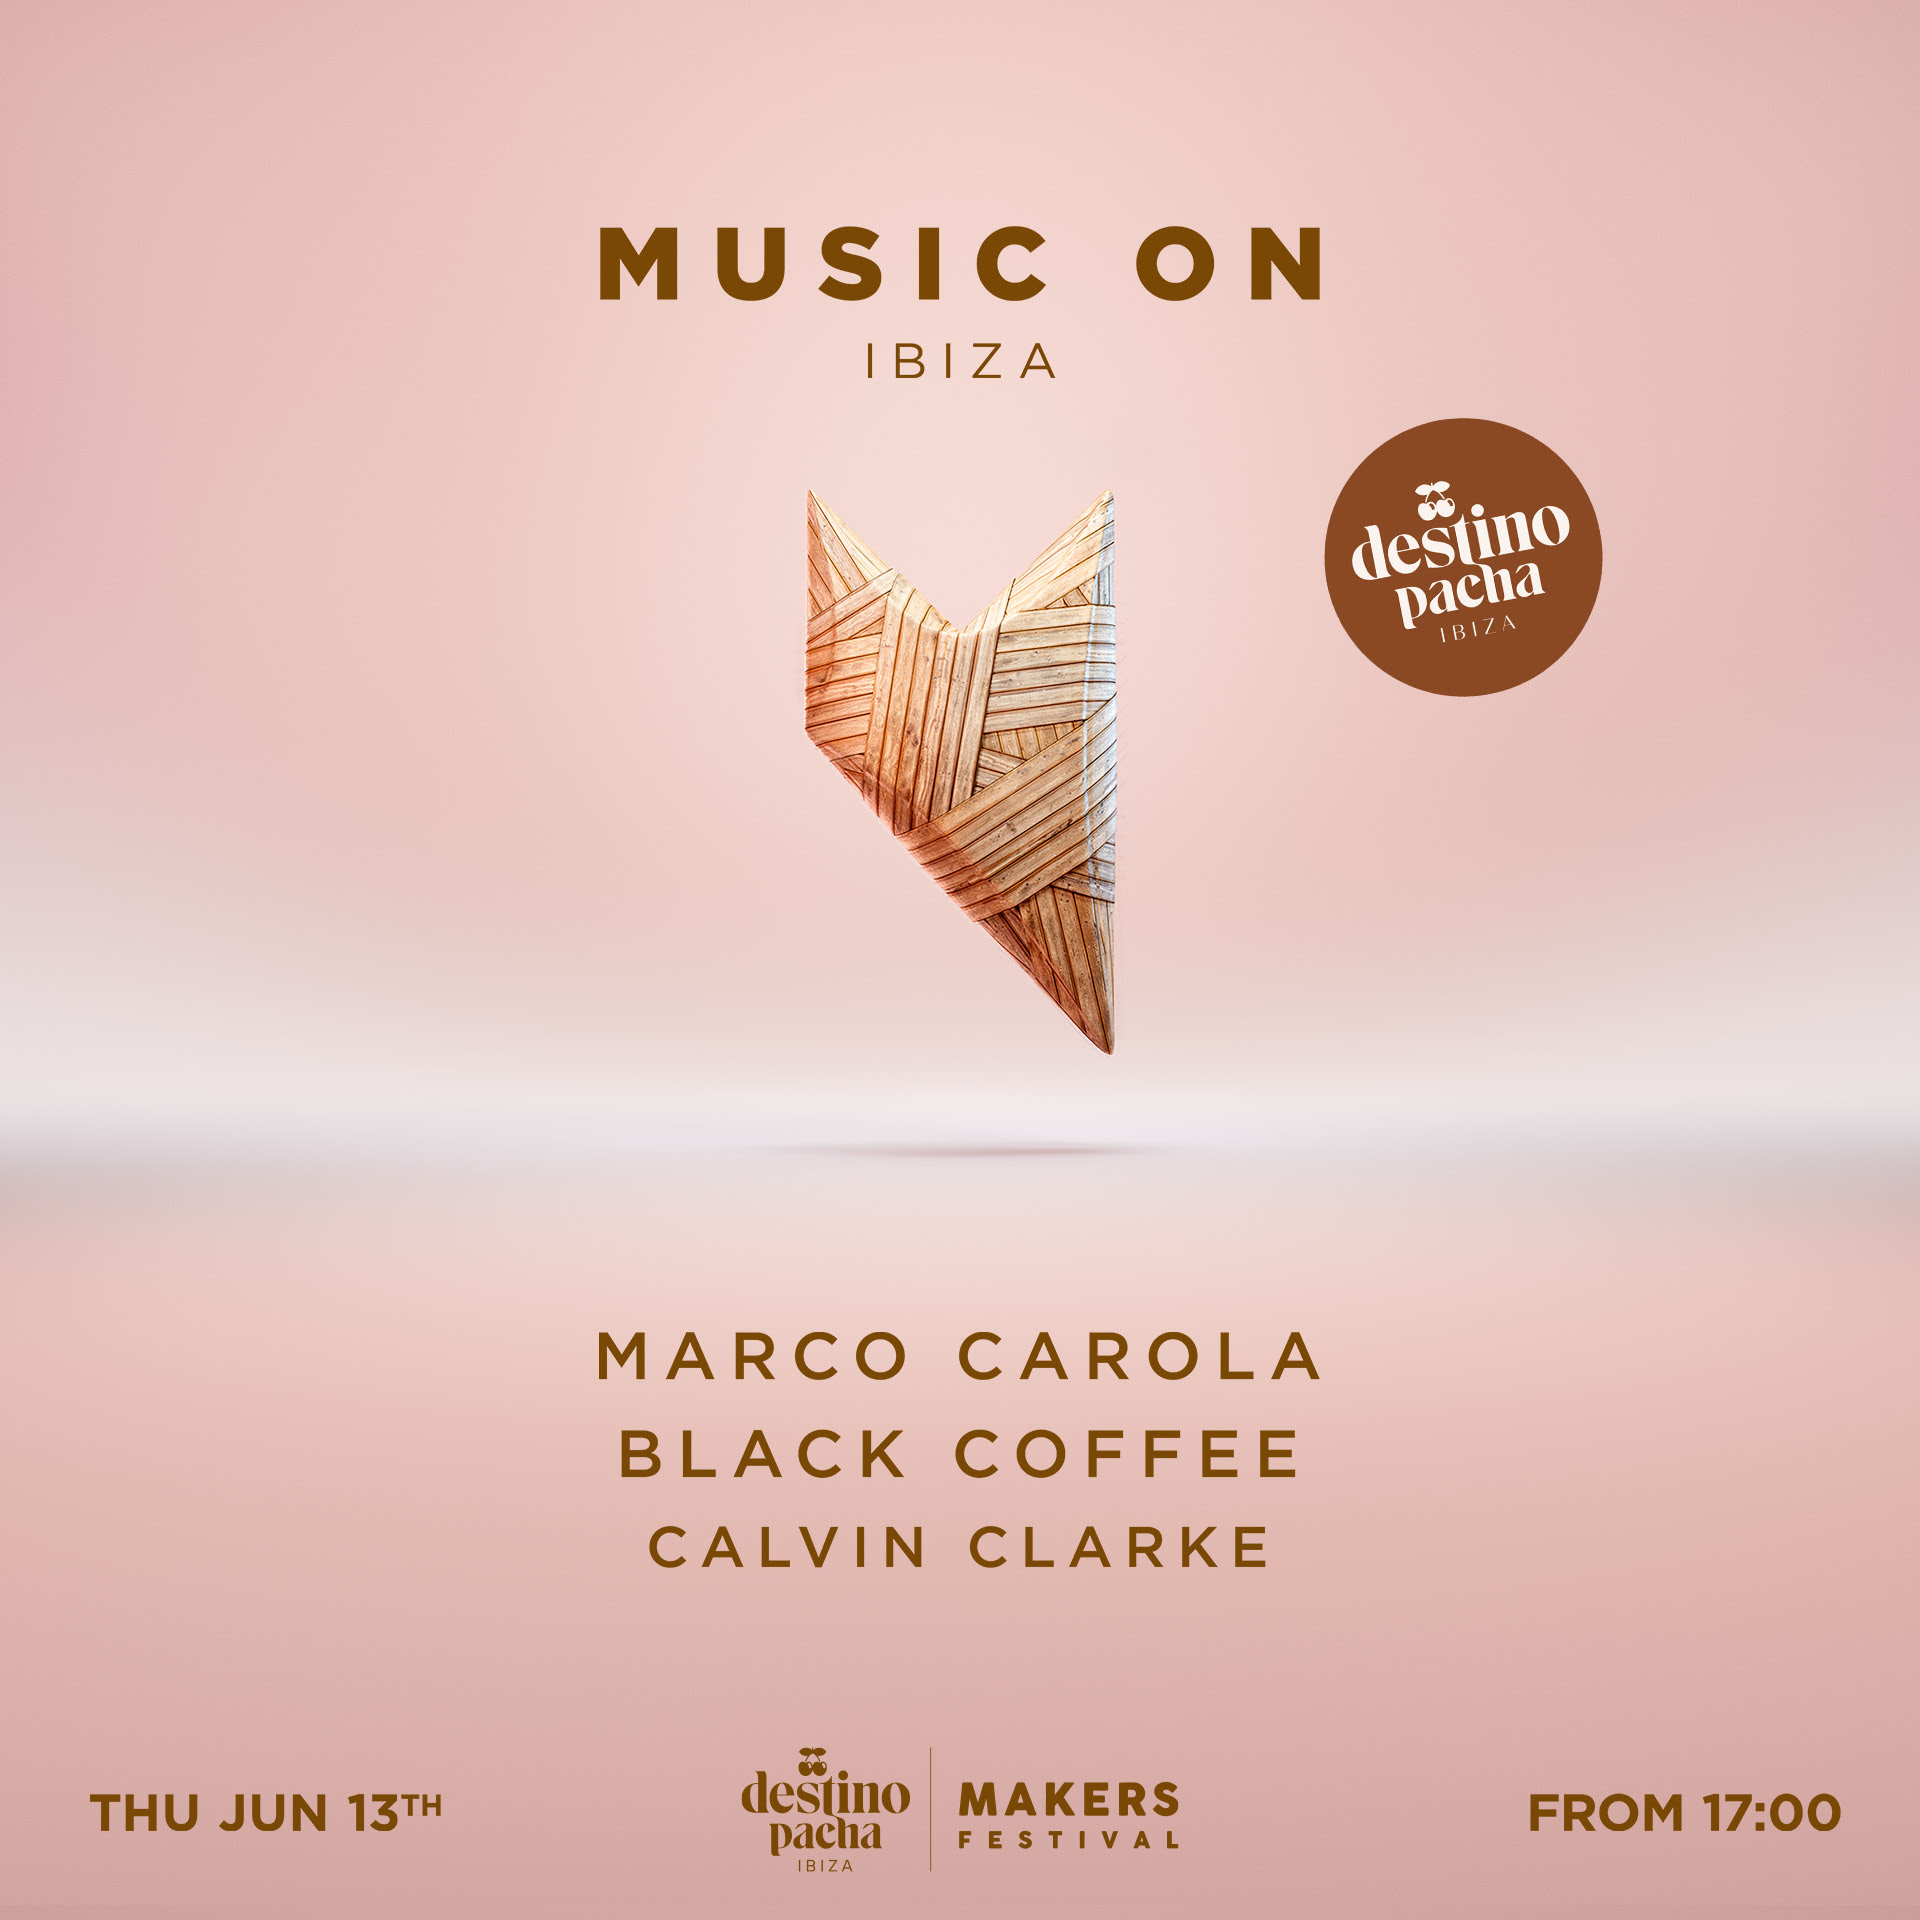 Marco Carola and Black Coffee